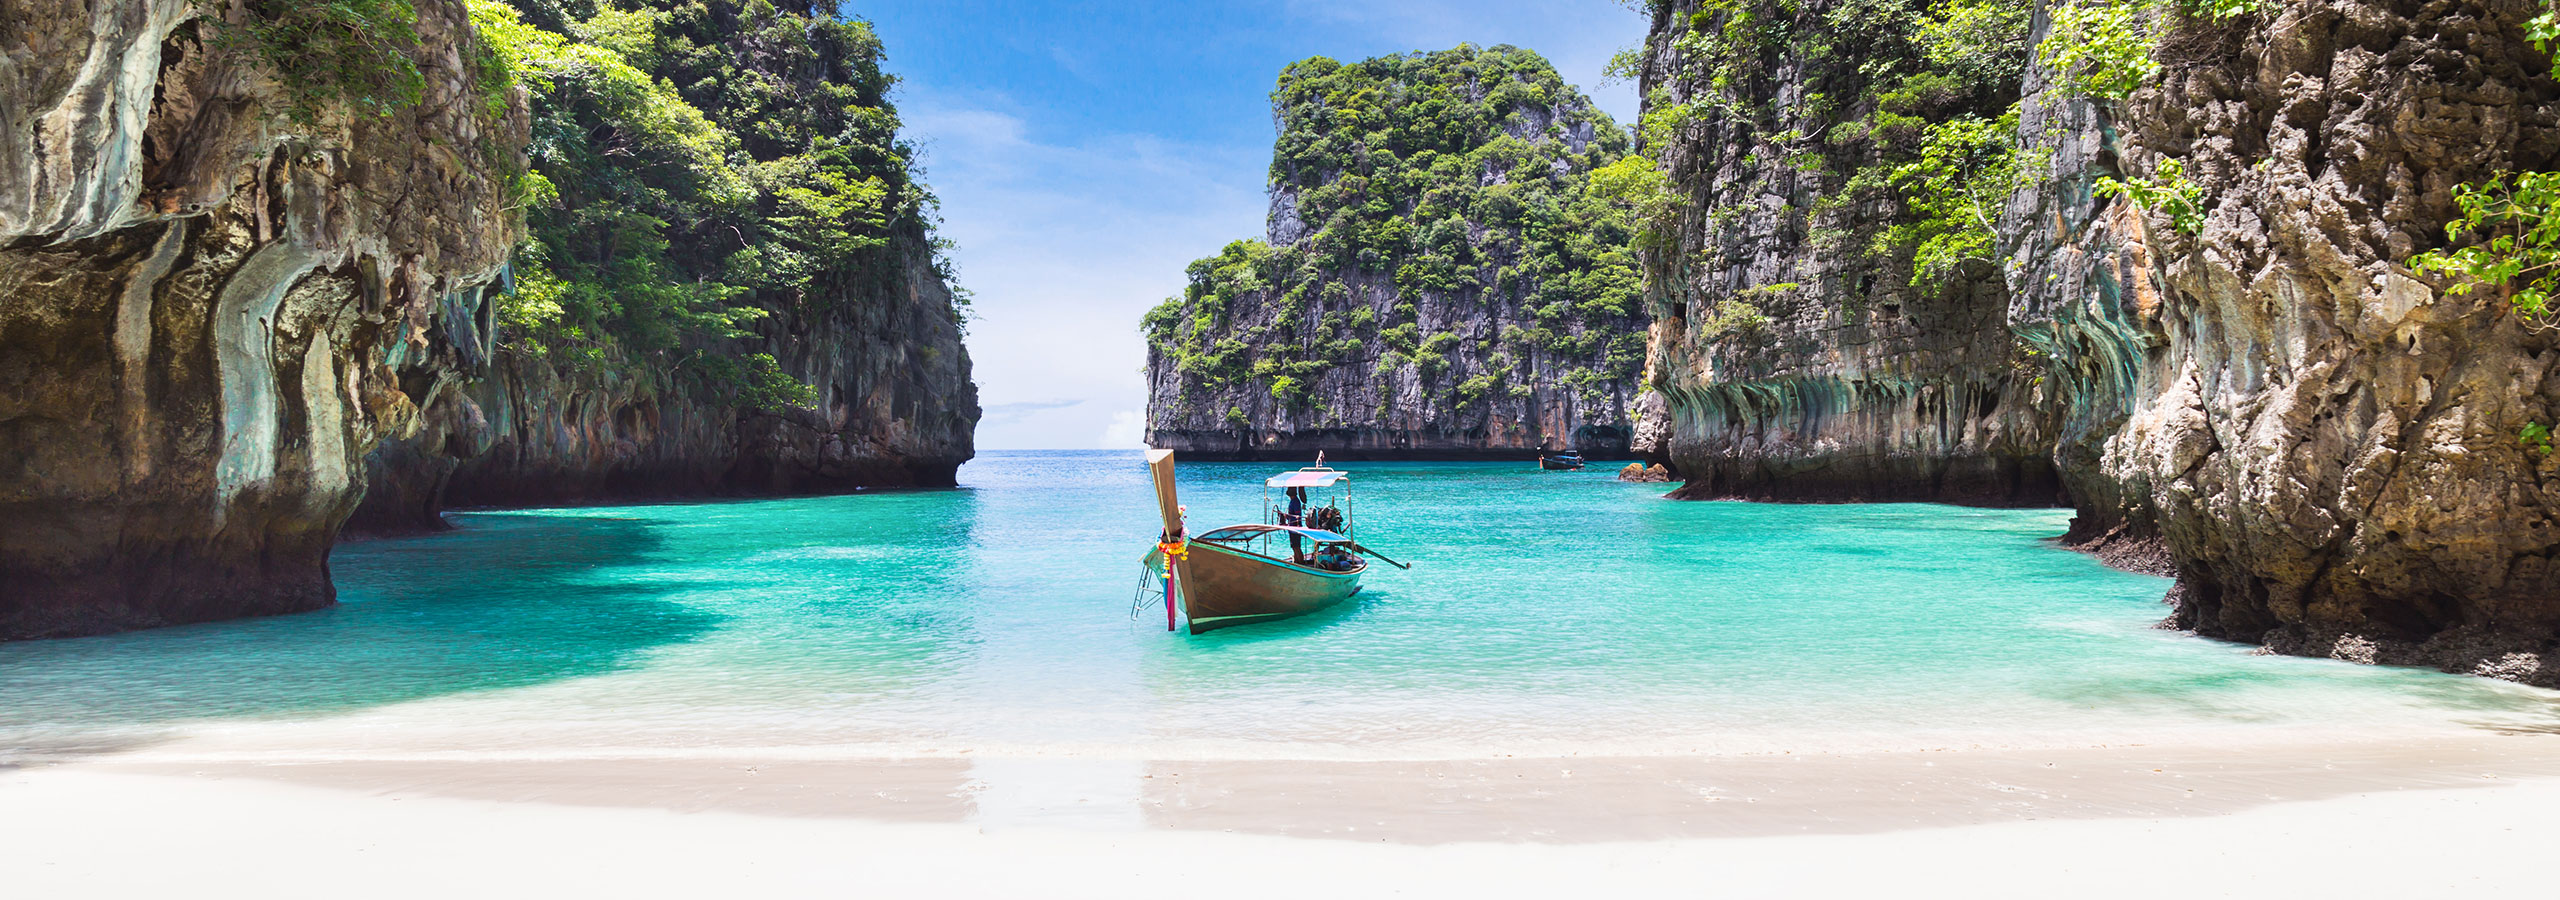 Southeast Asia vacation destination